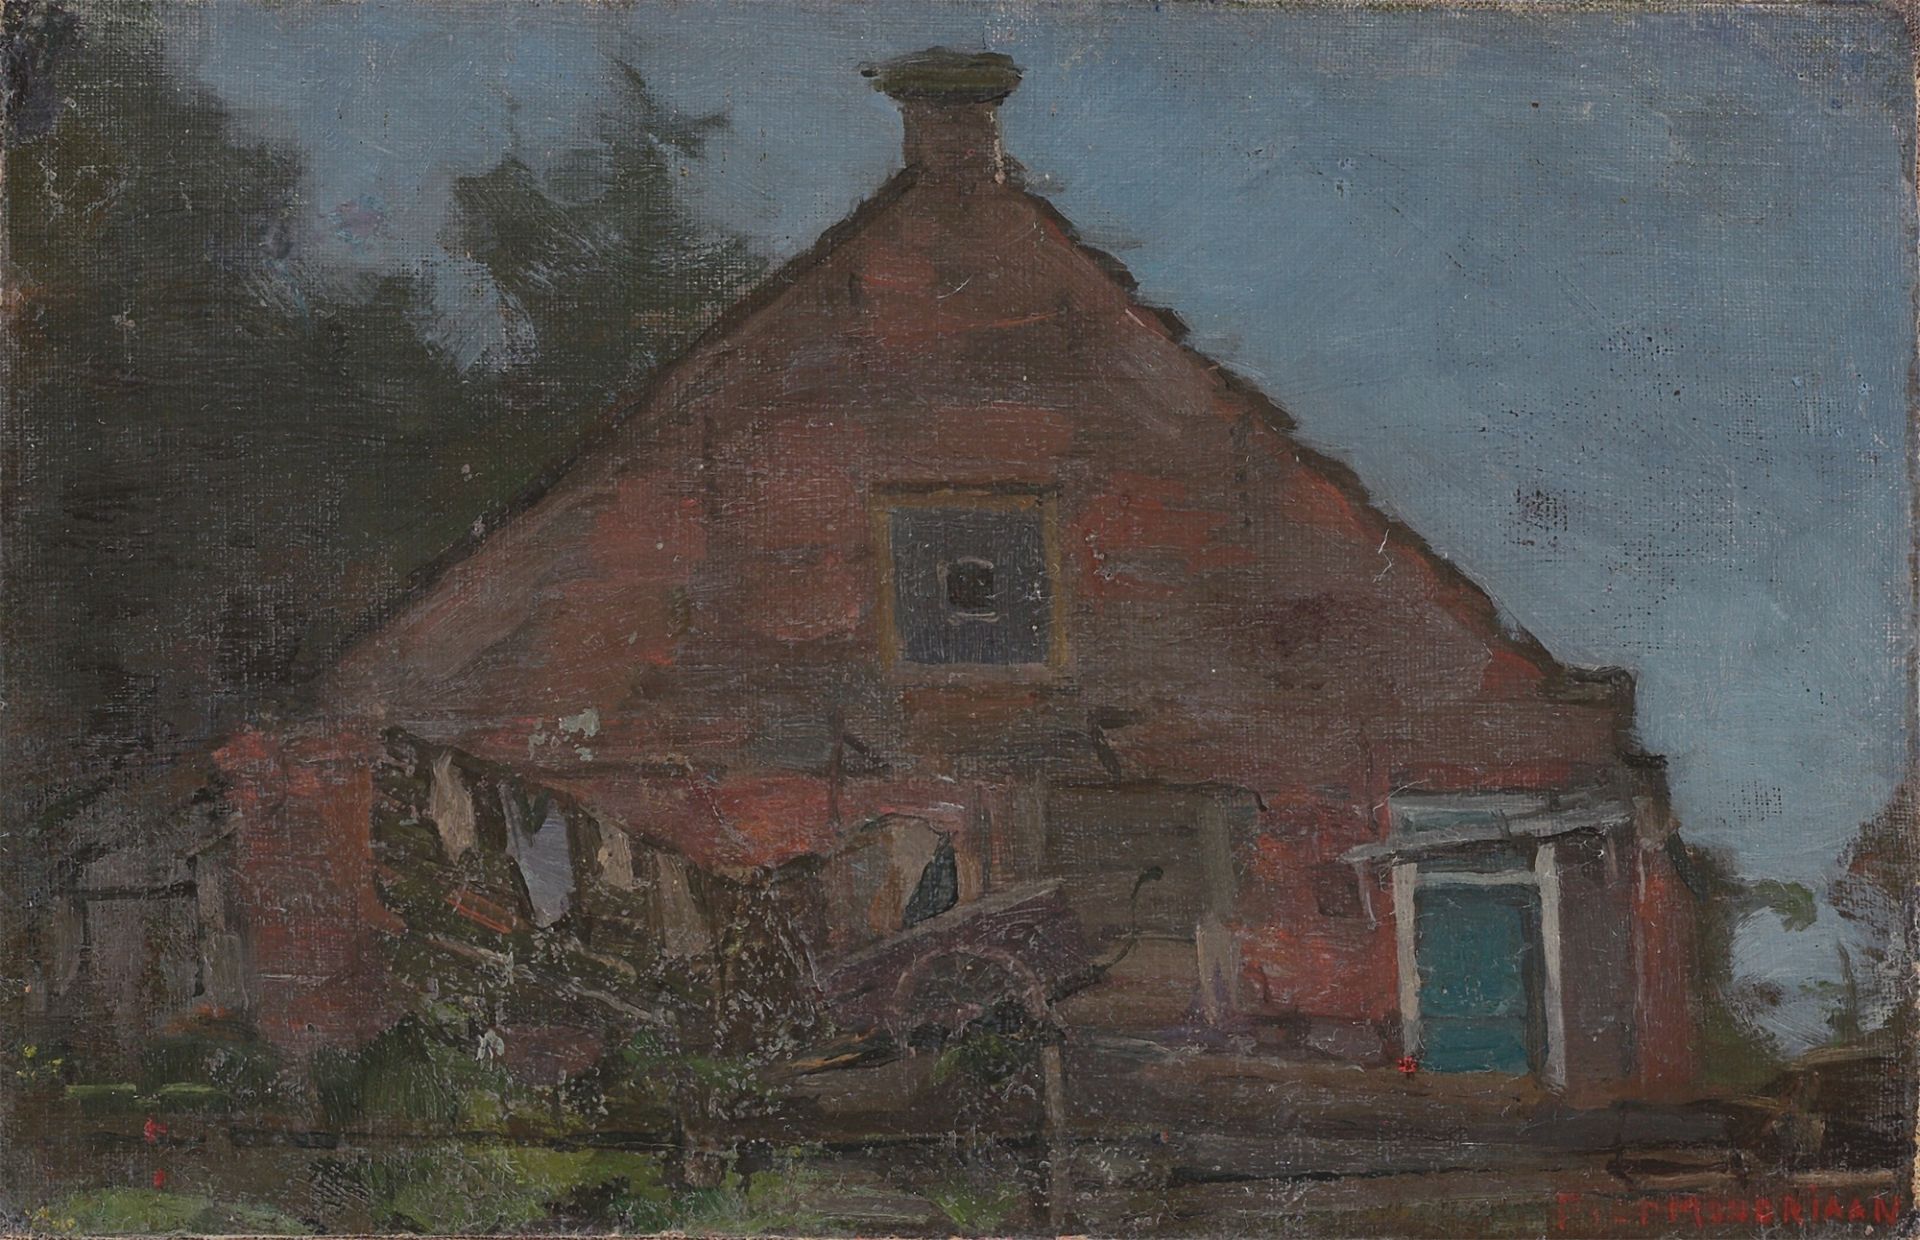 Piet Mondrian. ”House on the Gein, 1741, Reversed Sketch”. 1900